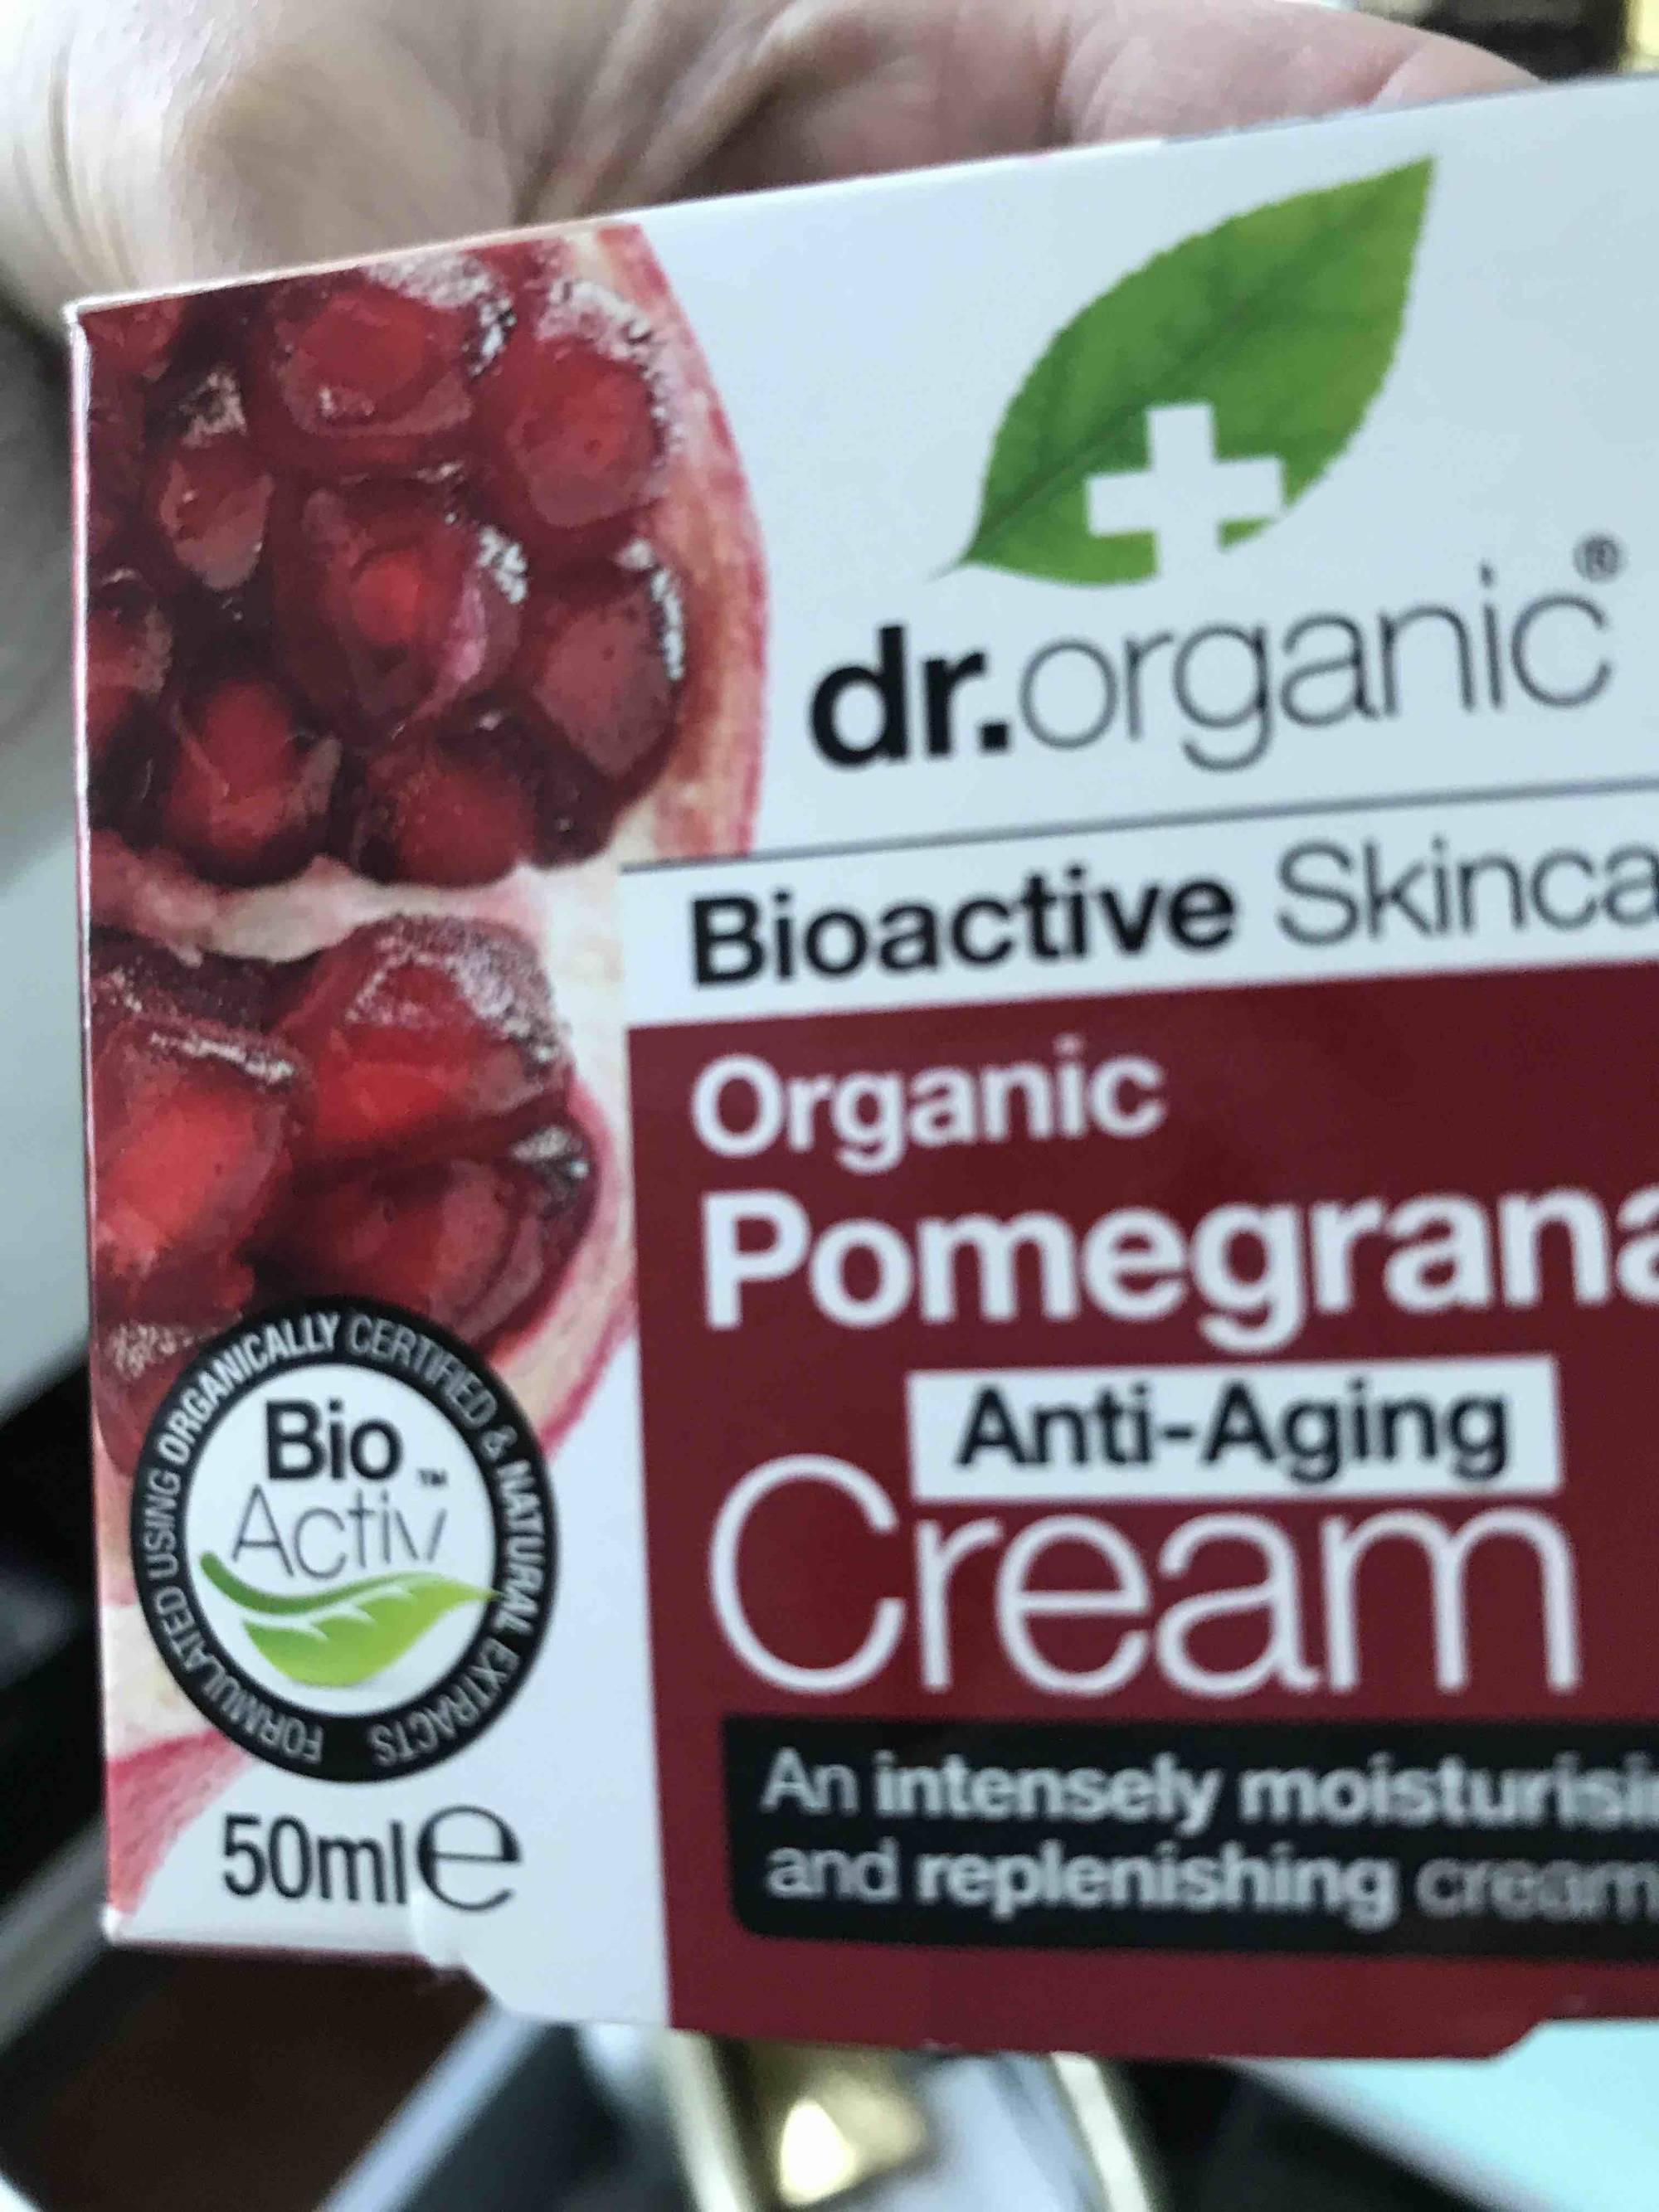 DR. ORGANIC - Bioactive skincare - Pomegranate anti-aging cream